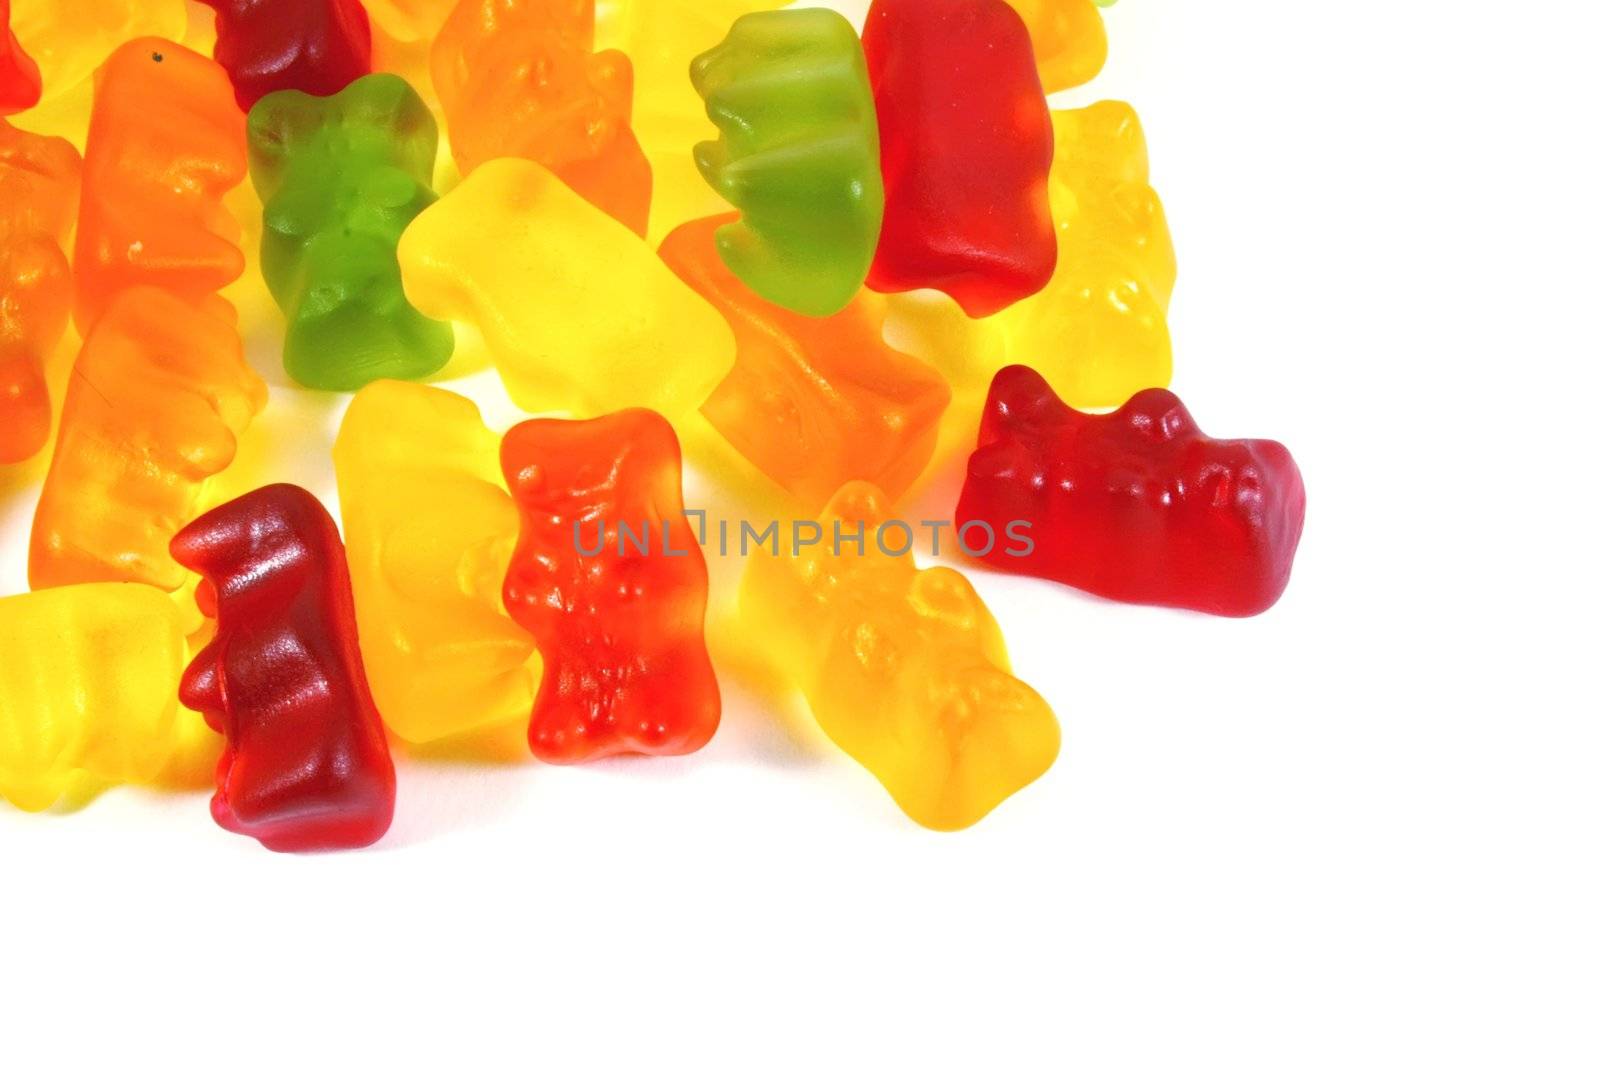 Gummi Bears by kentoh